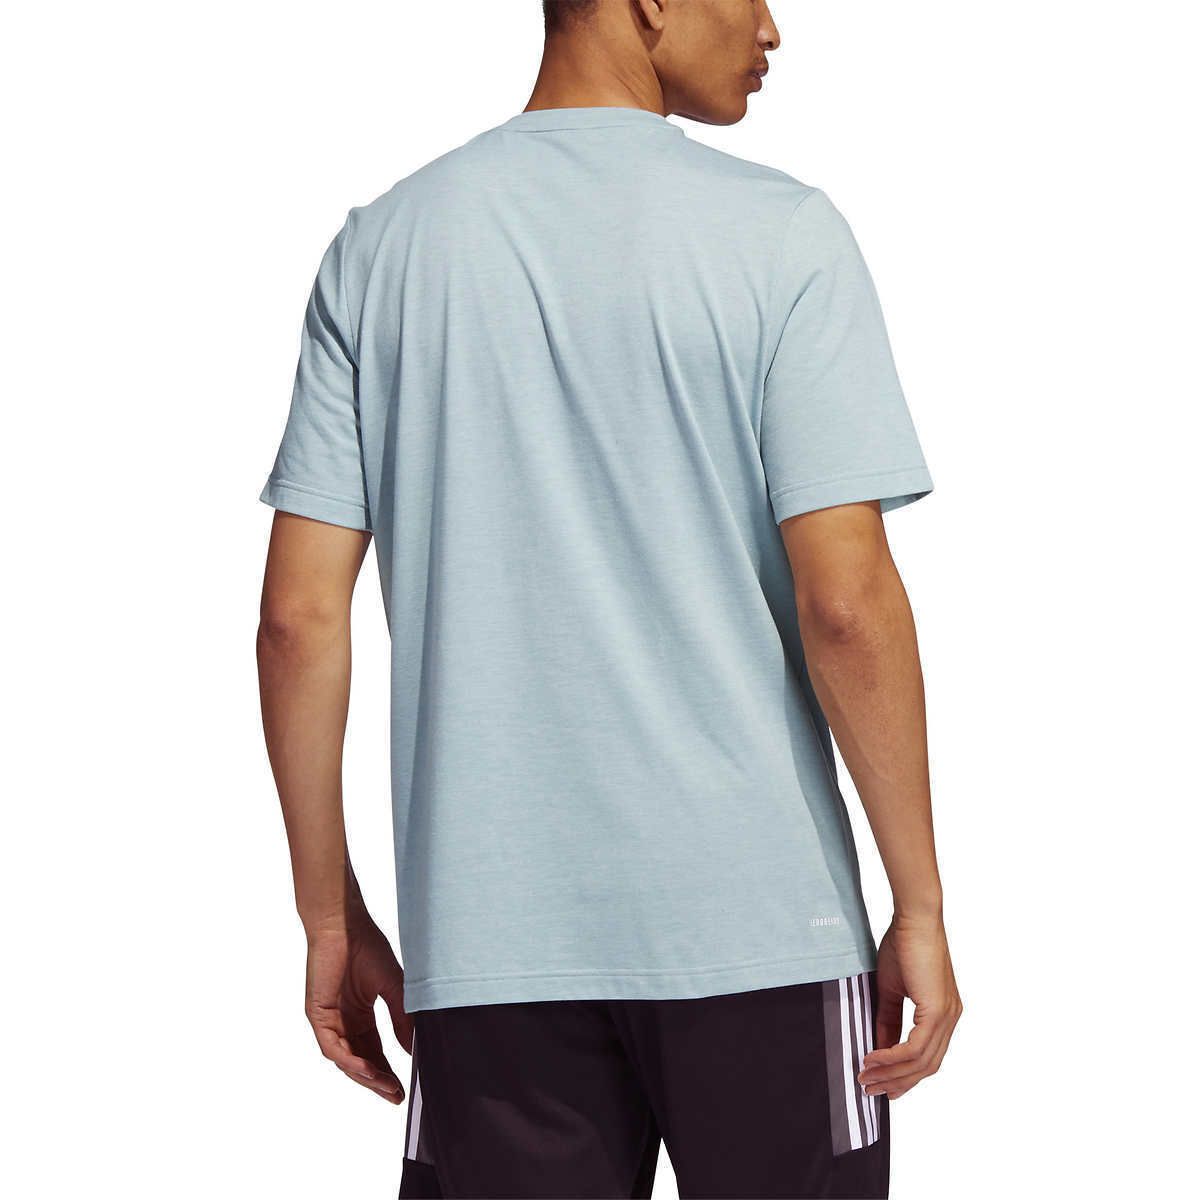 adidas Men's Aeroready T-Shirt - Lightweight Moisture-Wicking Athletic Tee for Superior Performance